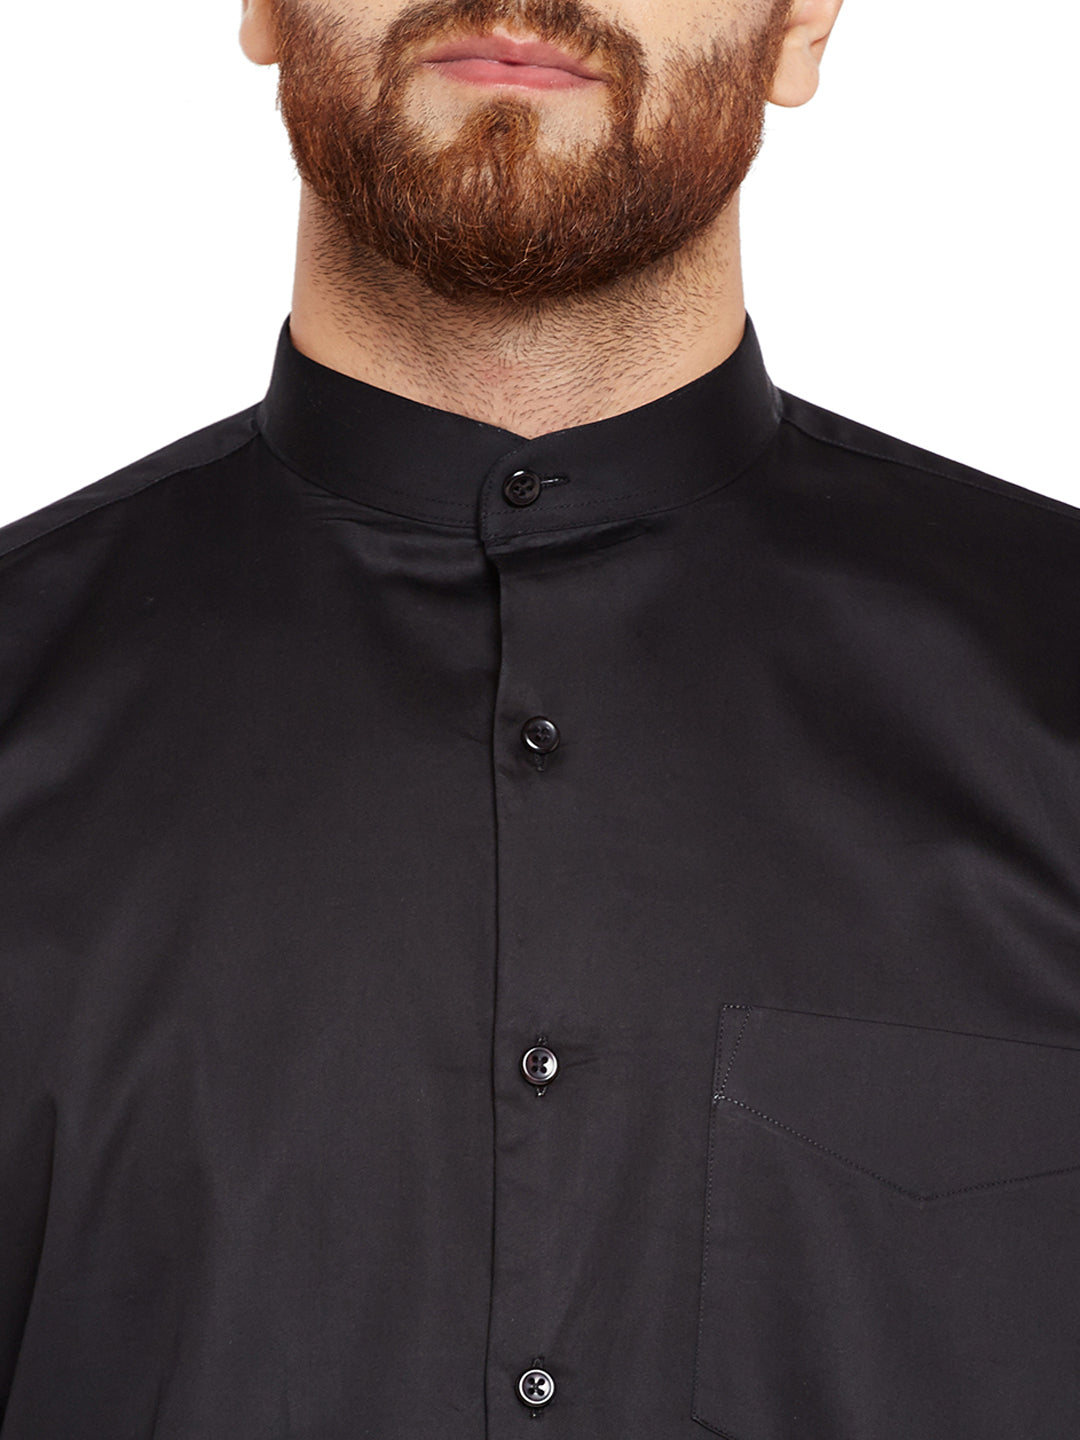 Men Black Solid Slim Fit Pure Cotton Satin Formal Shirt